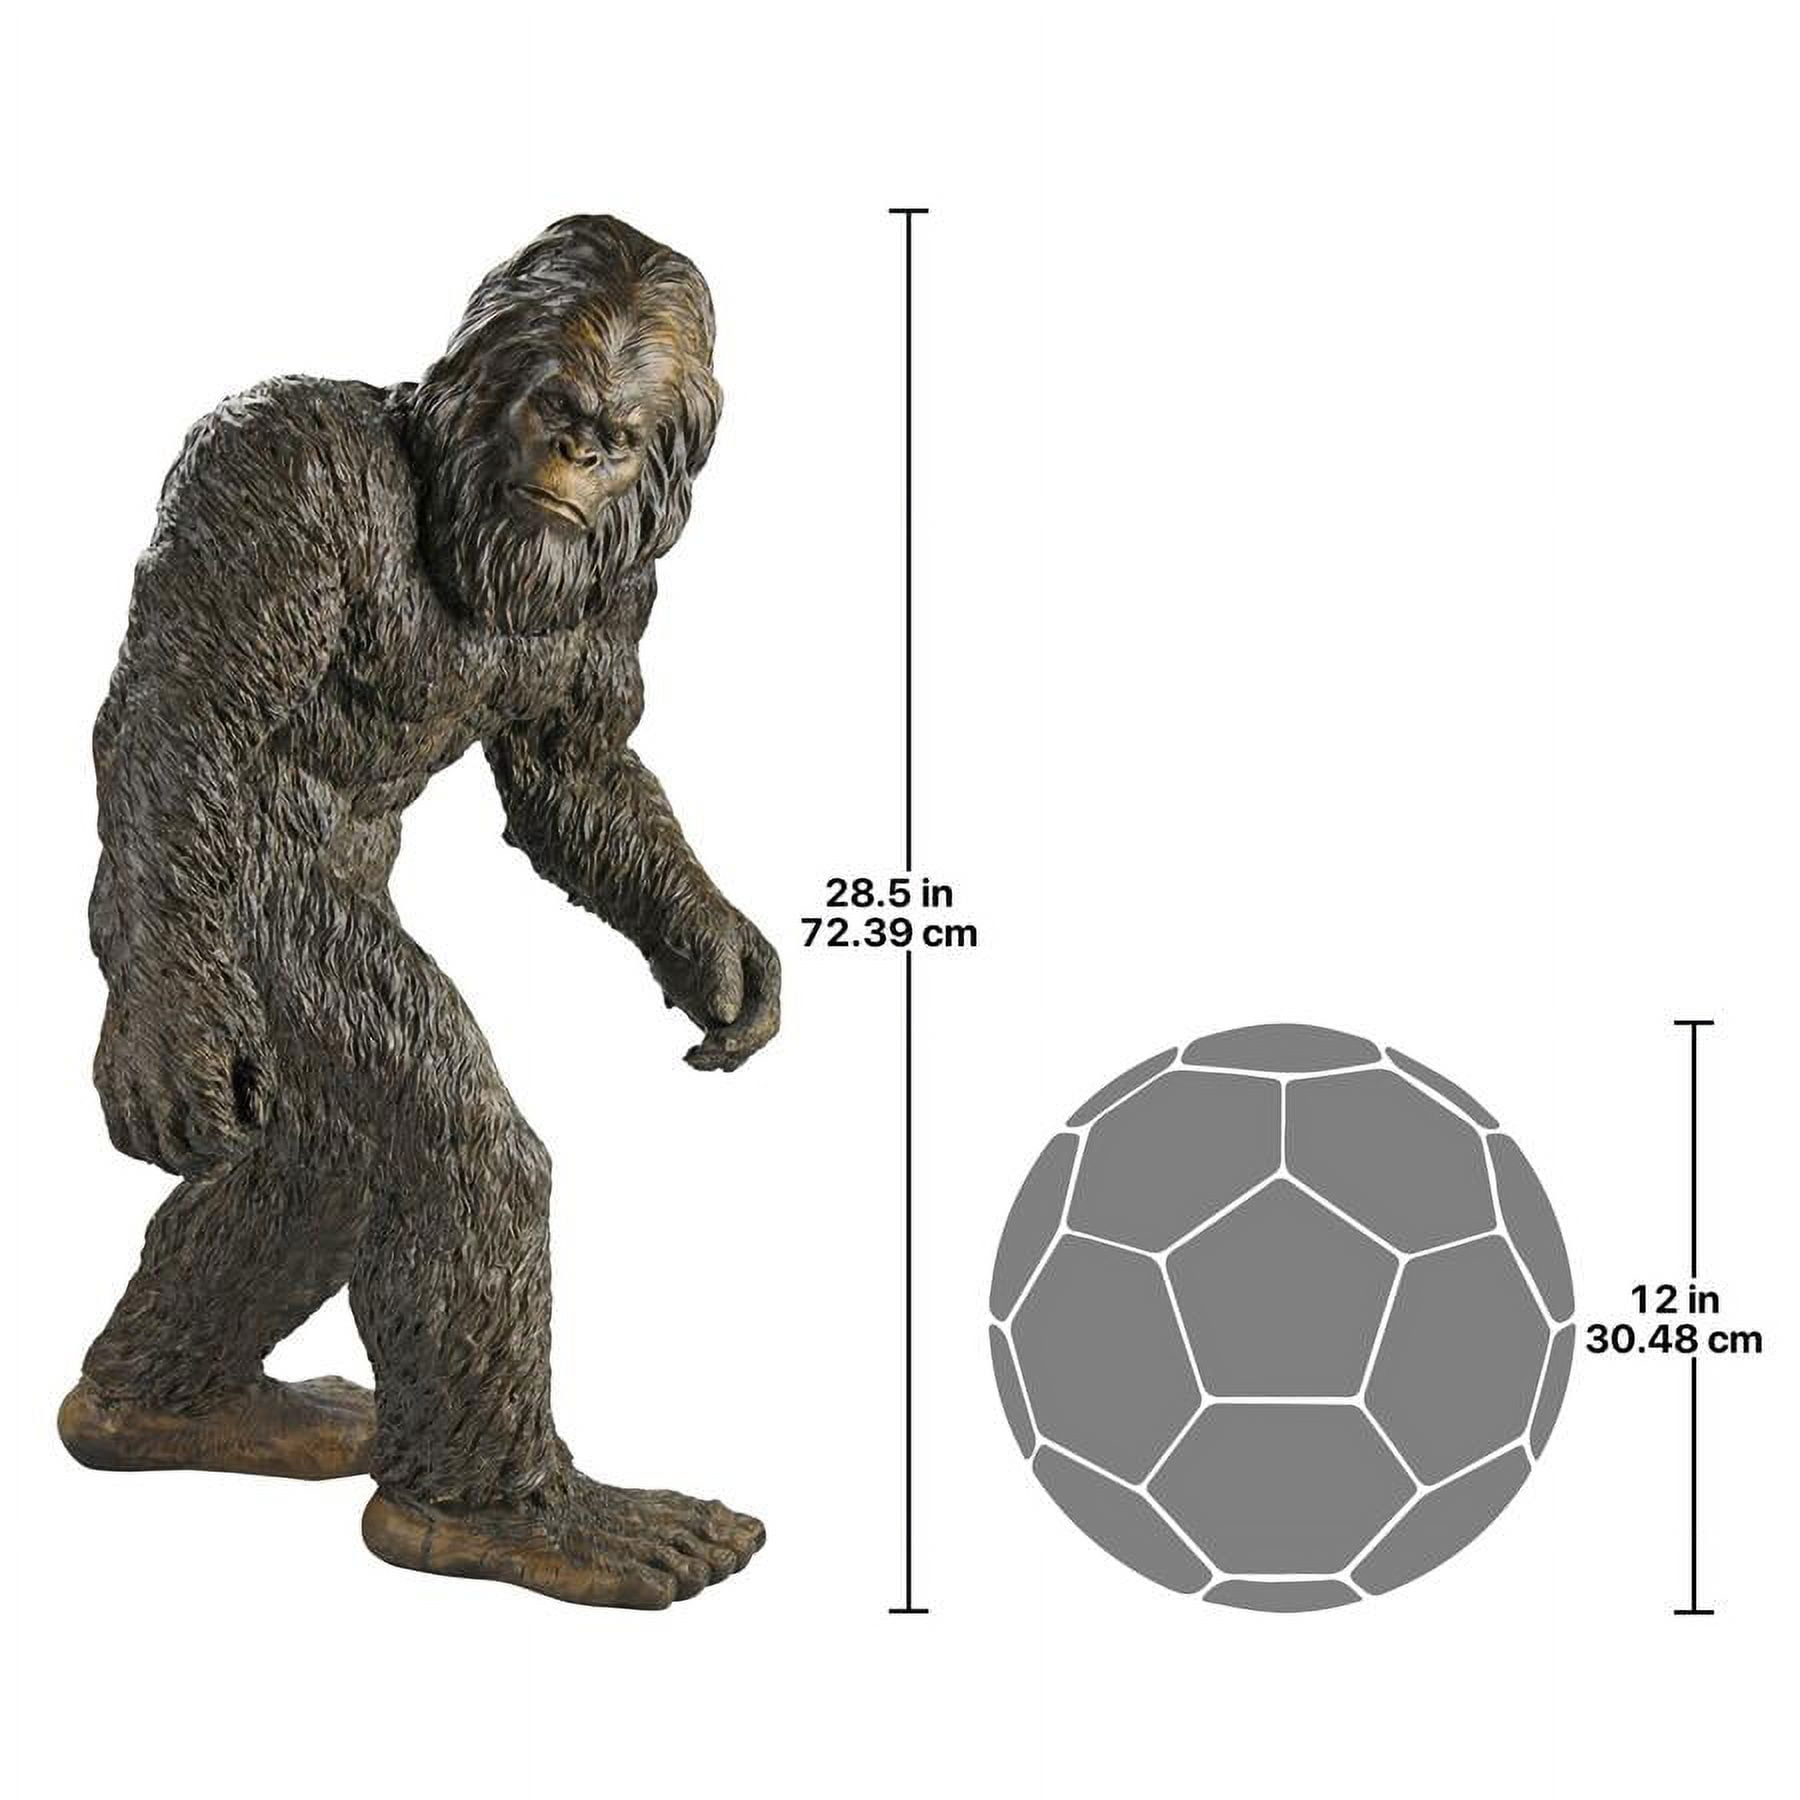 Bigfoot the Giant Life-size Yeti Statue - NE110119 - Design Toscano